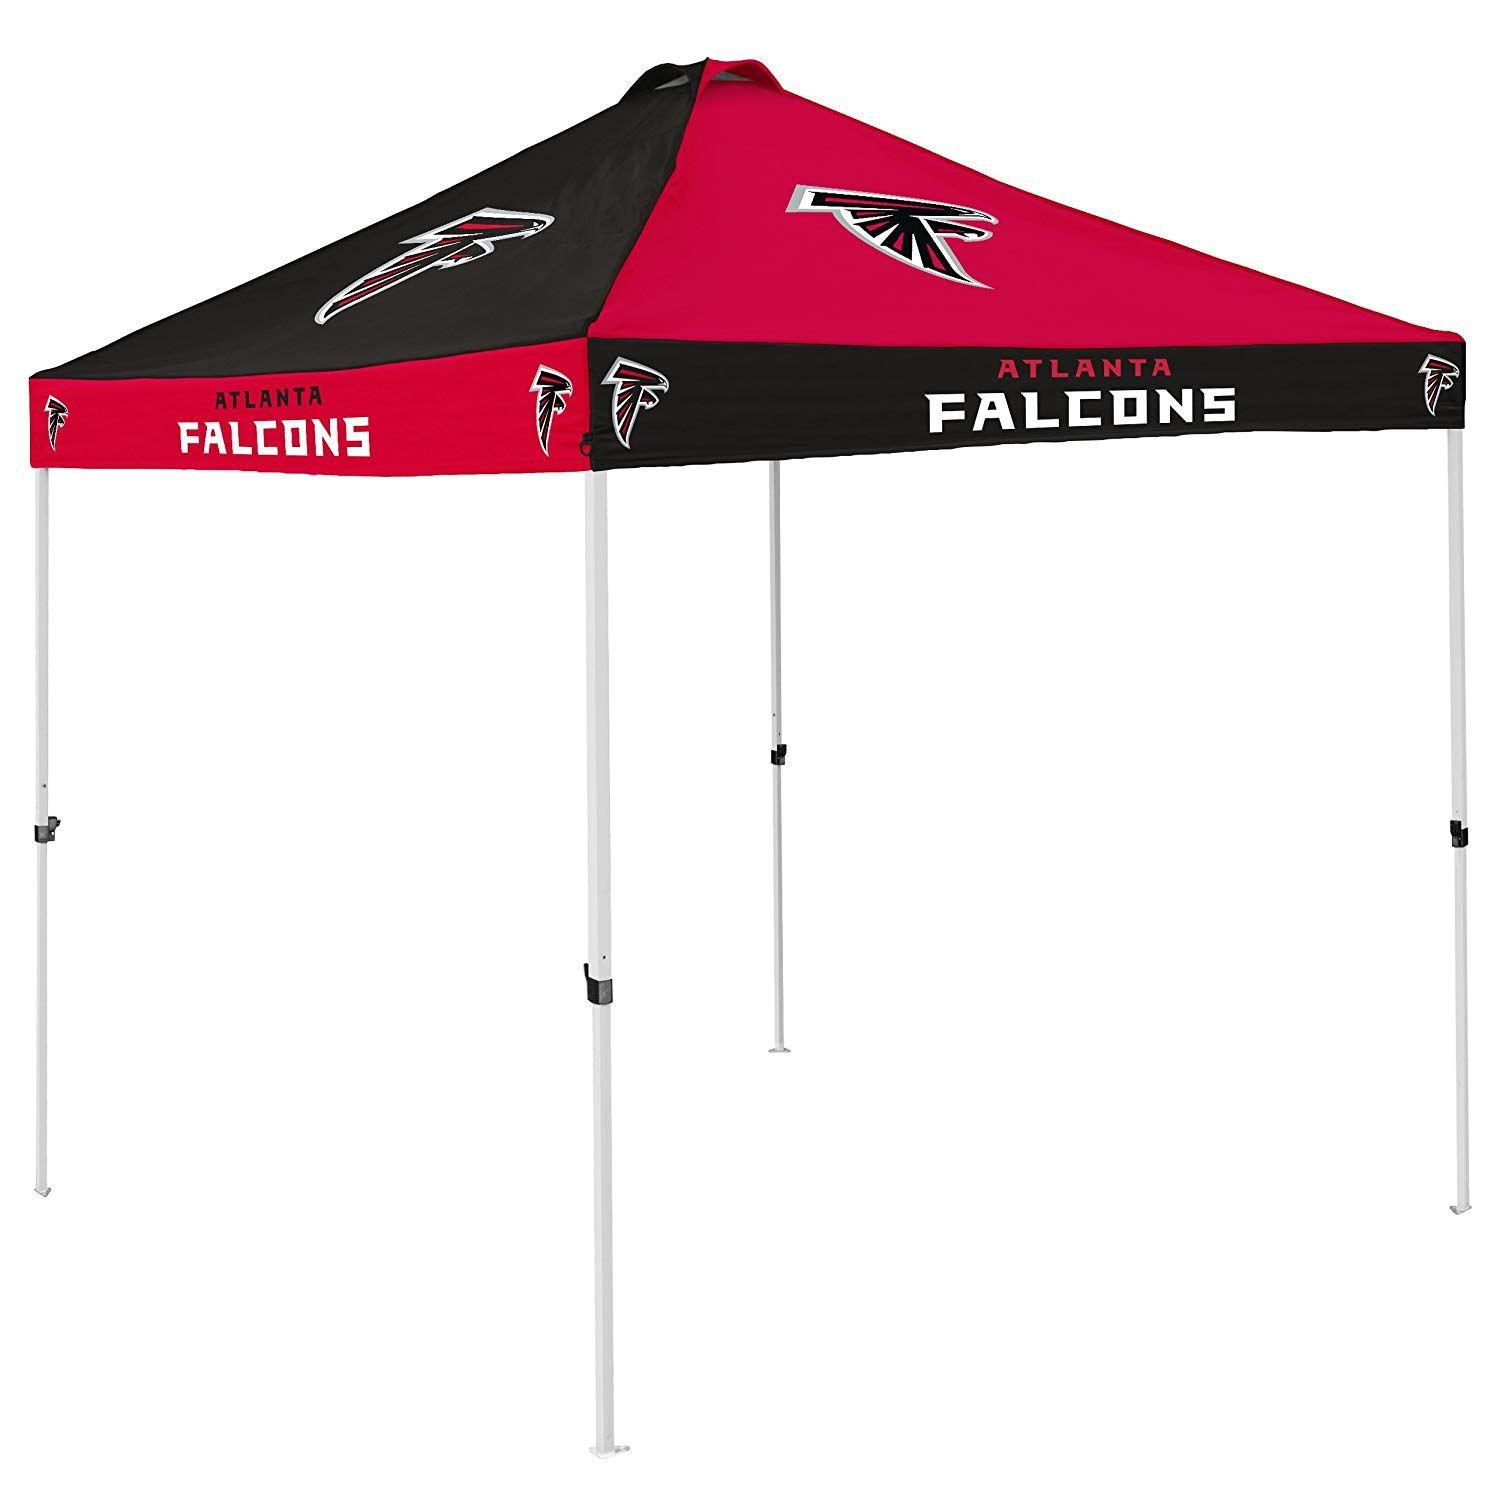 Checkerboard Logo - Amazon.com : Logo Brands NFL Atlanta Falcons Checkerboard Tent